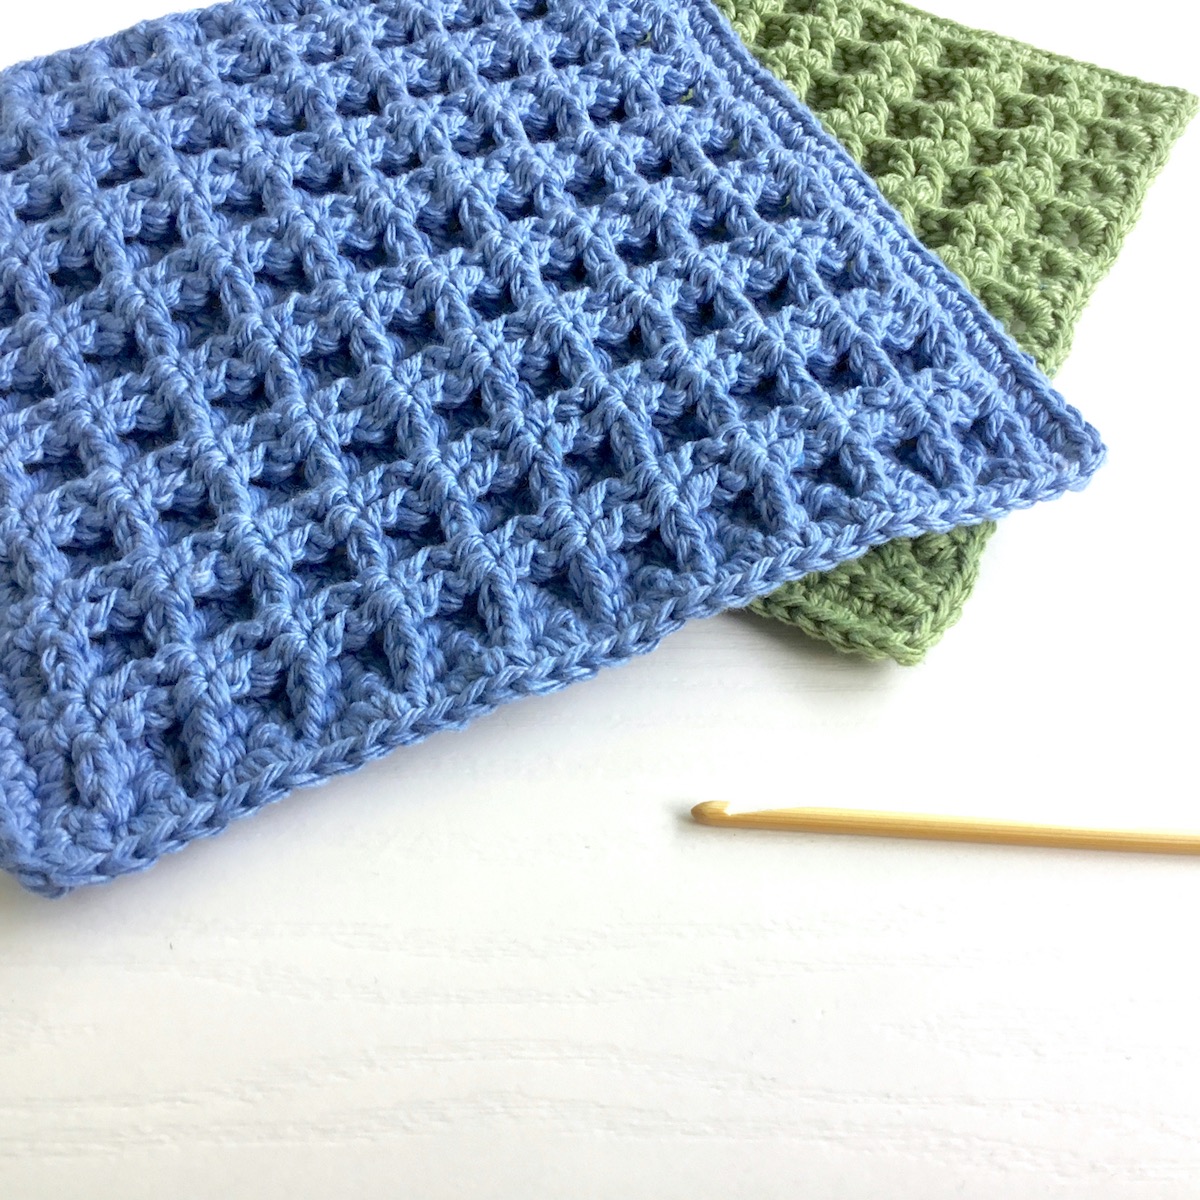 Crochet Pattern for a Waffle Stitch Dishcloth